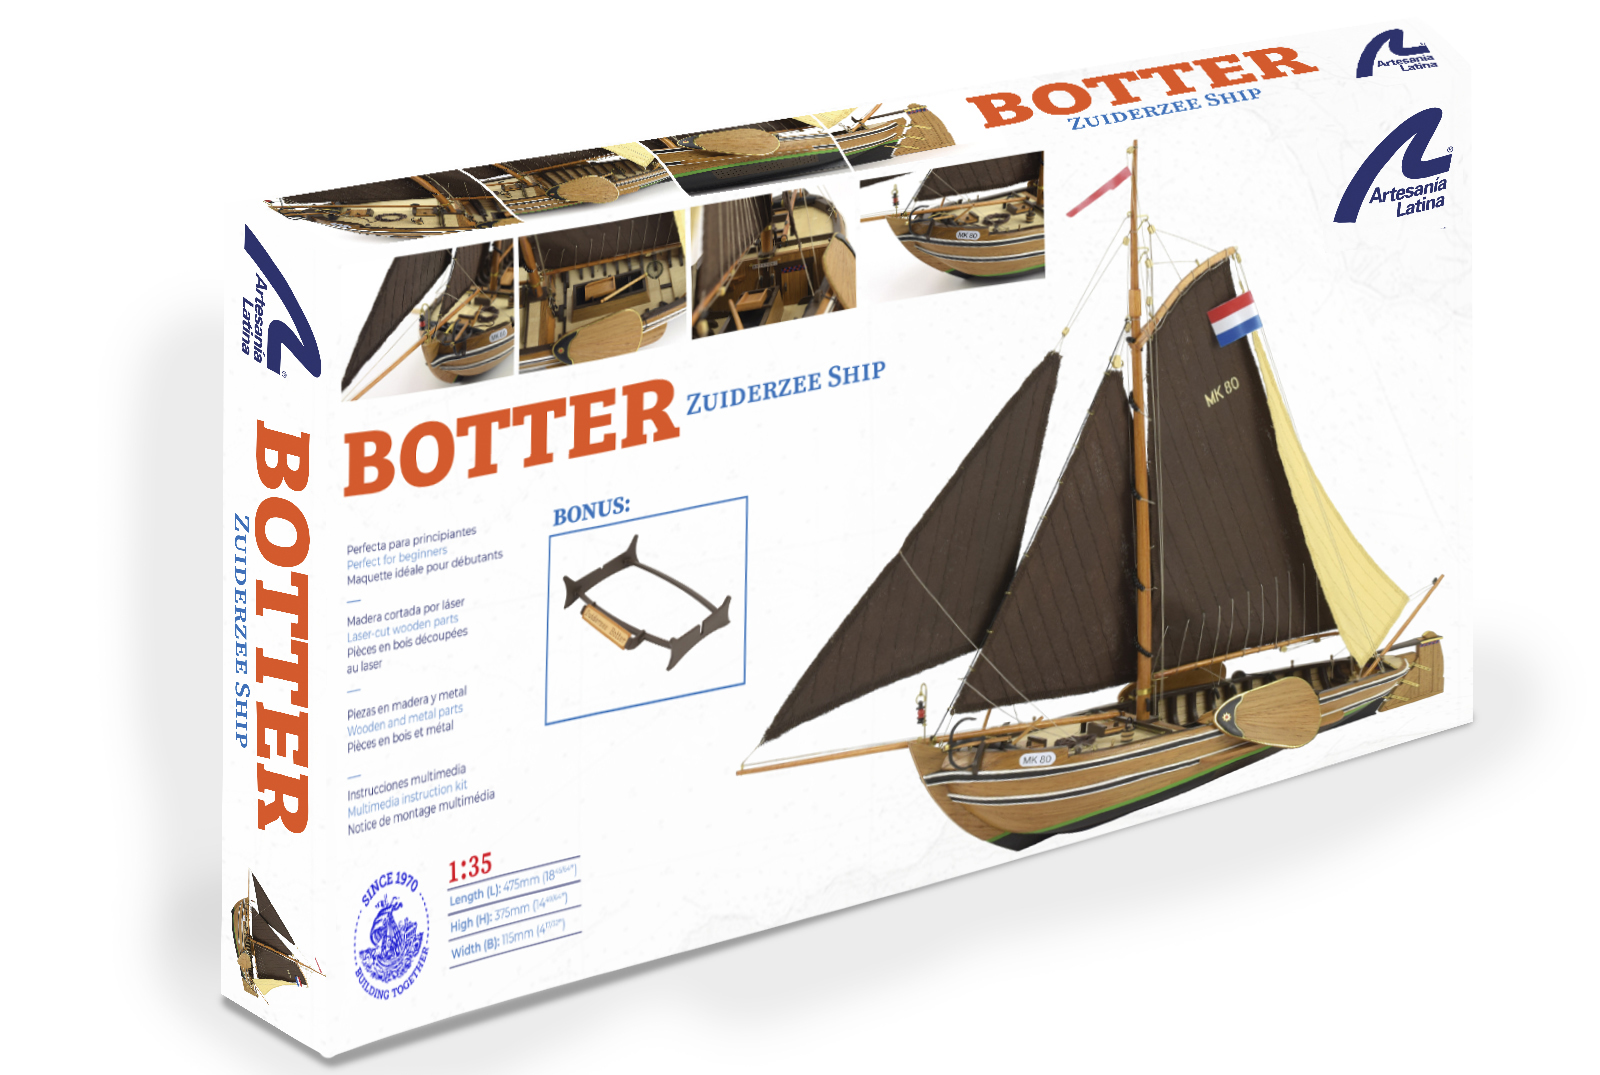 Modeling on Black Friday 2022: Wooden Model Ship Dutch Fishing Boat Botter (22125) by Artesania Latina.